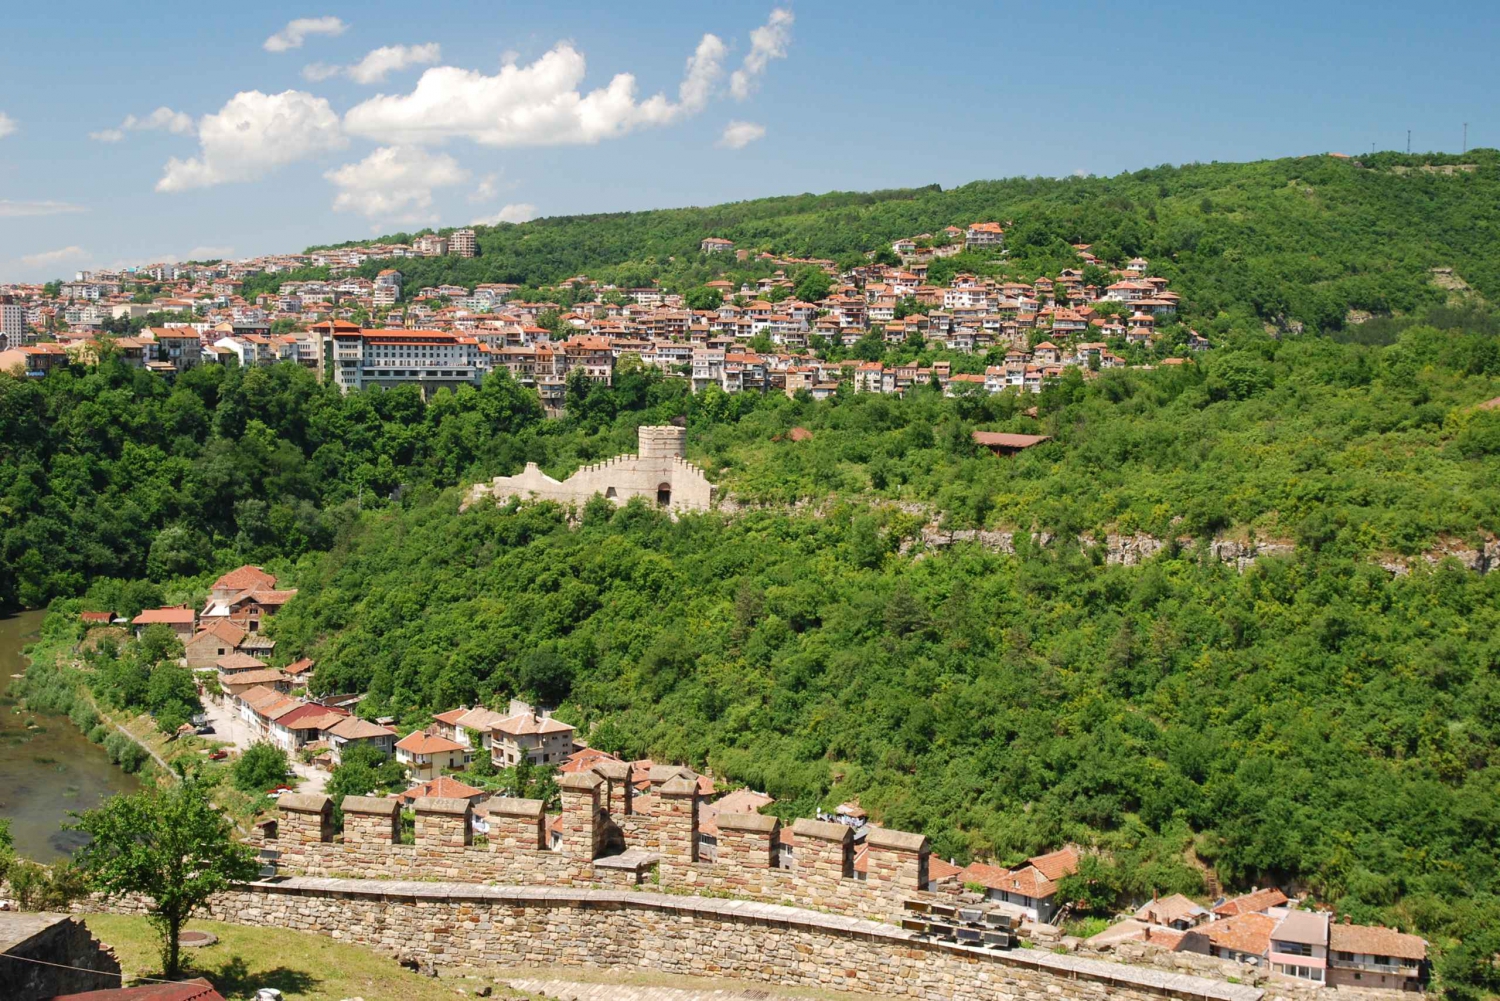 Full-Day Tour to Veliko Tarnovo and Arbanassi